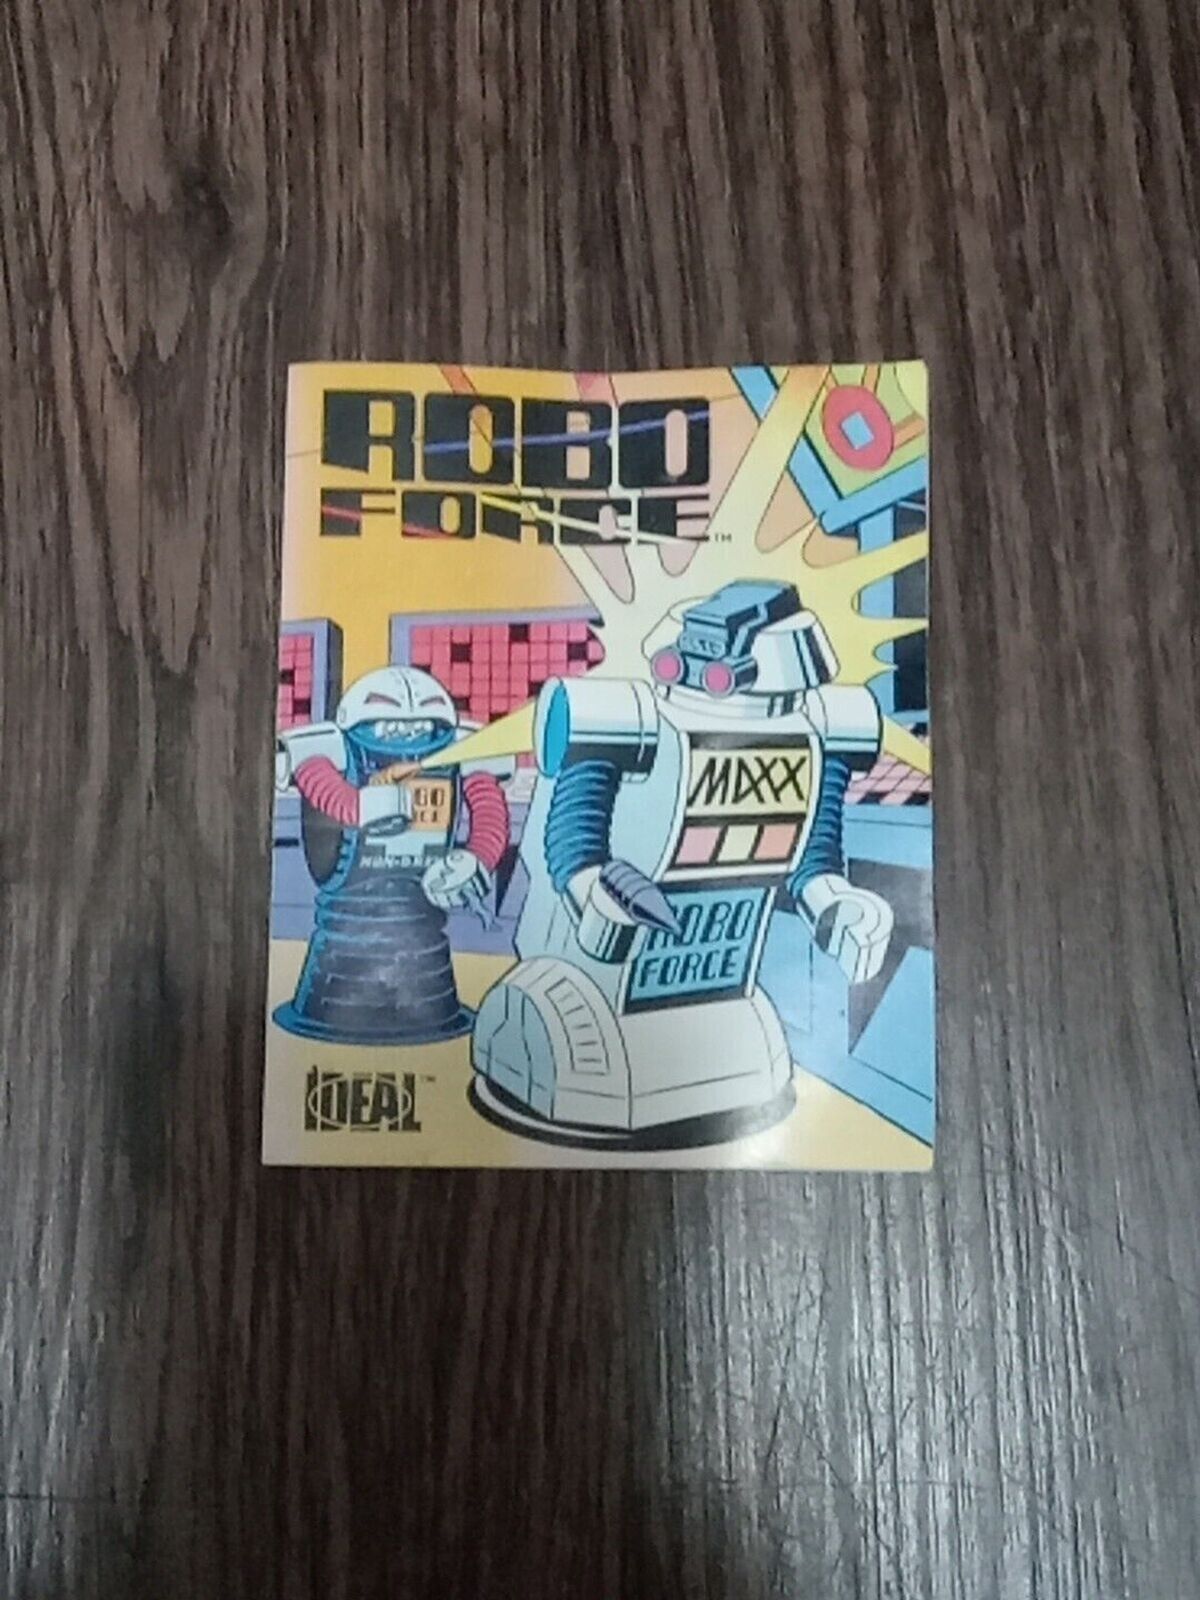 Ideal Robo Force Max  Steele Mini Comic Book